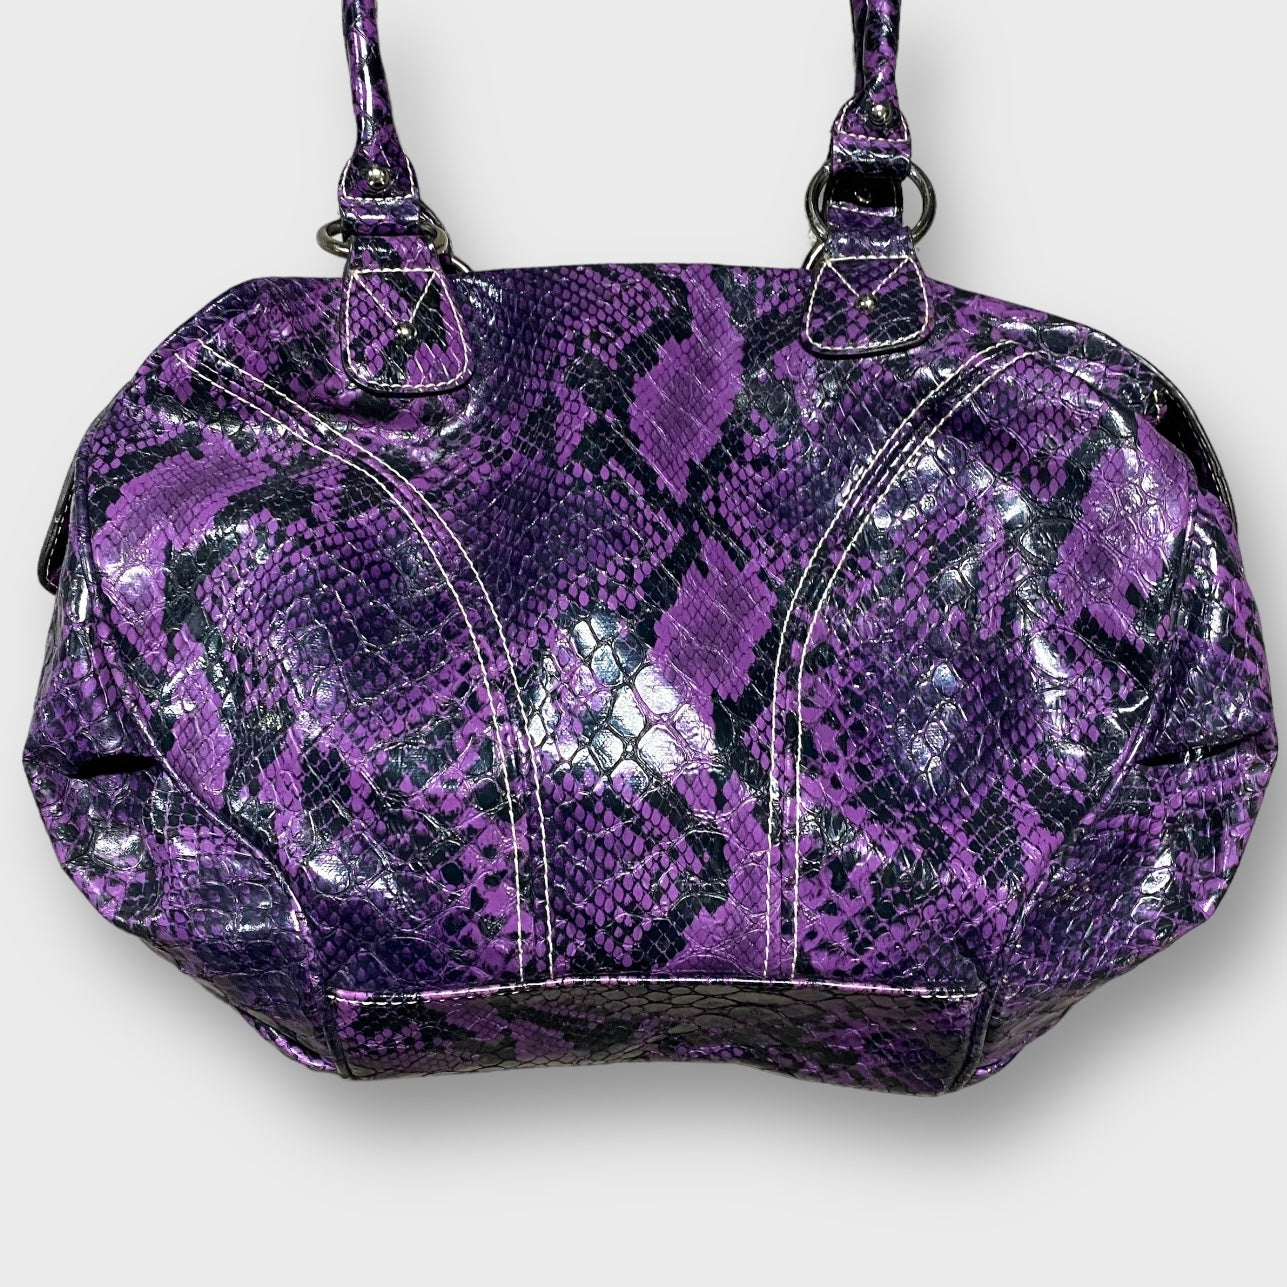 Python pattern hand bag